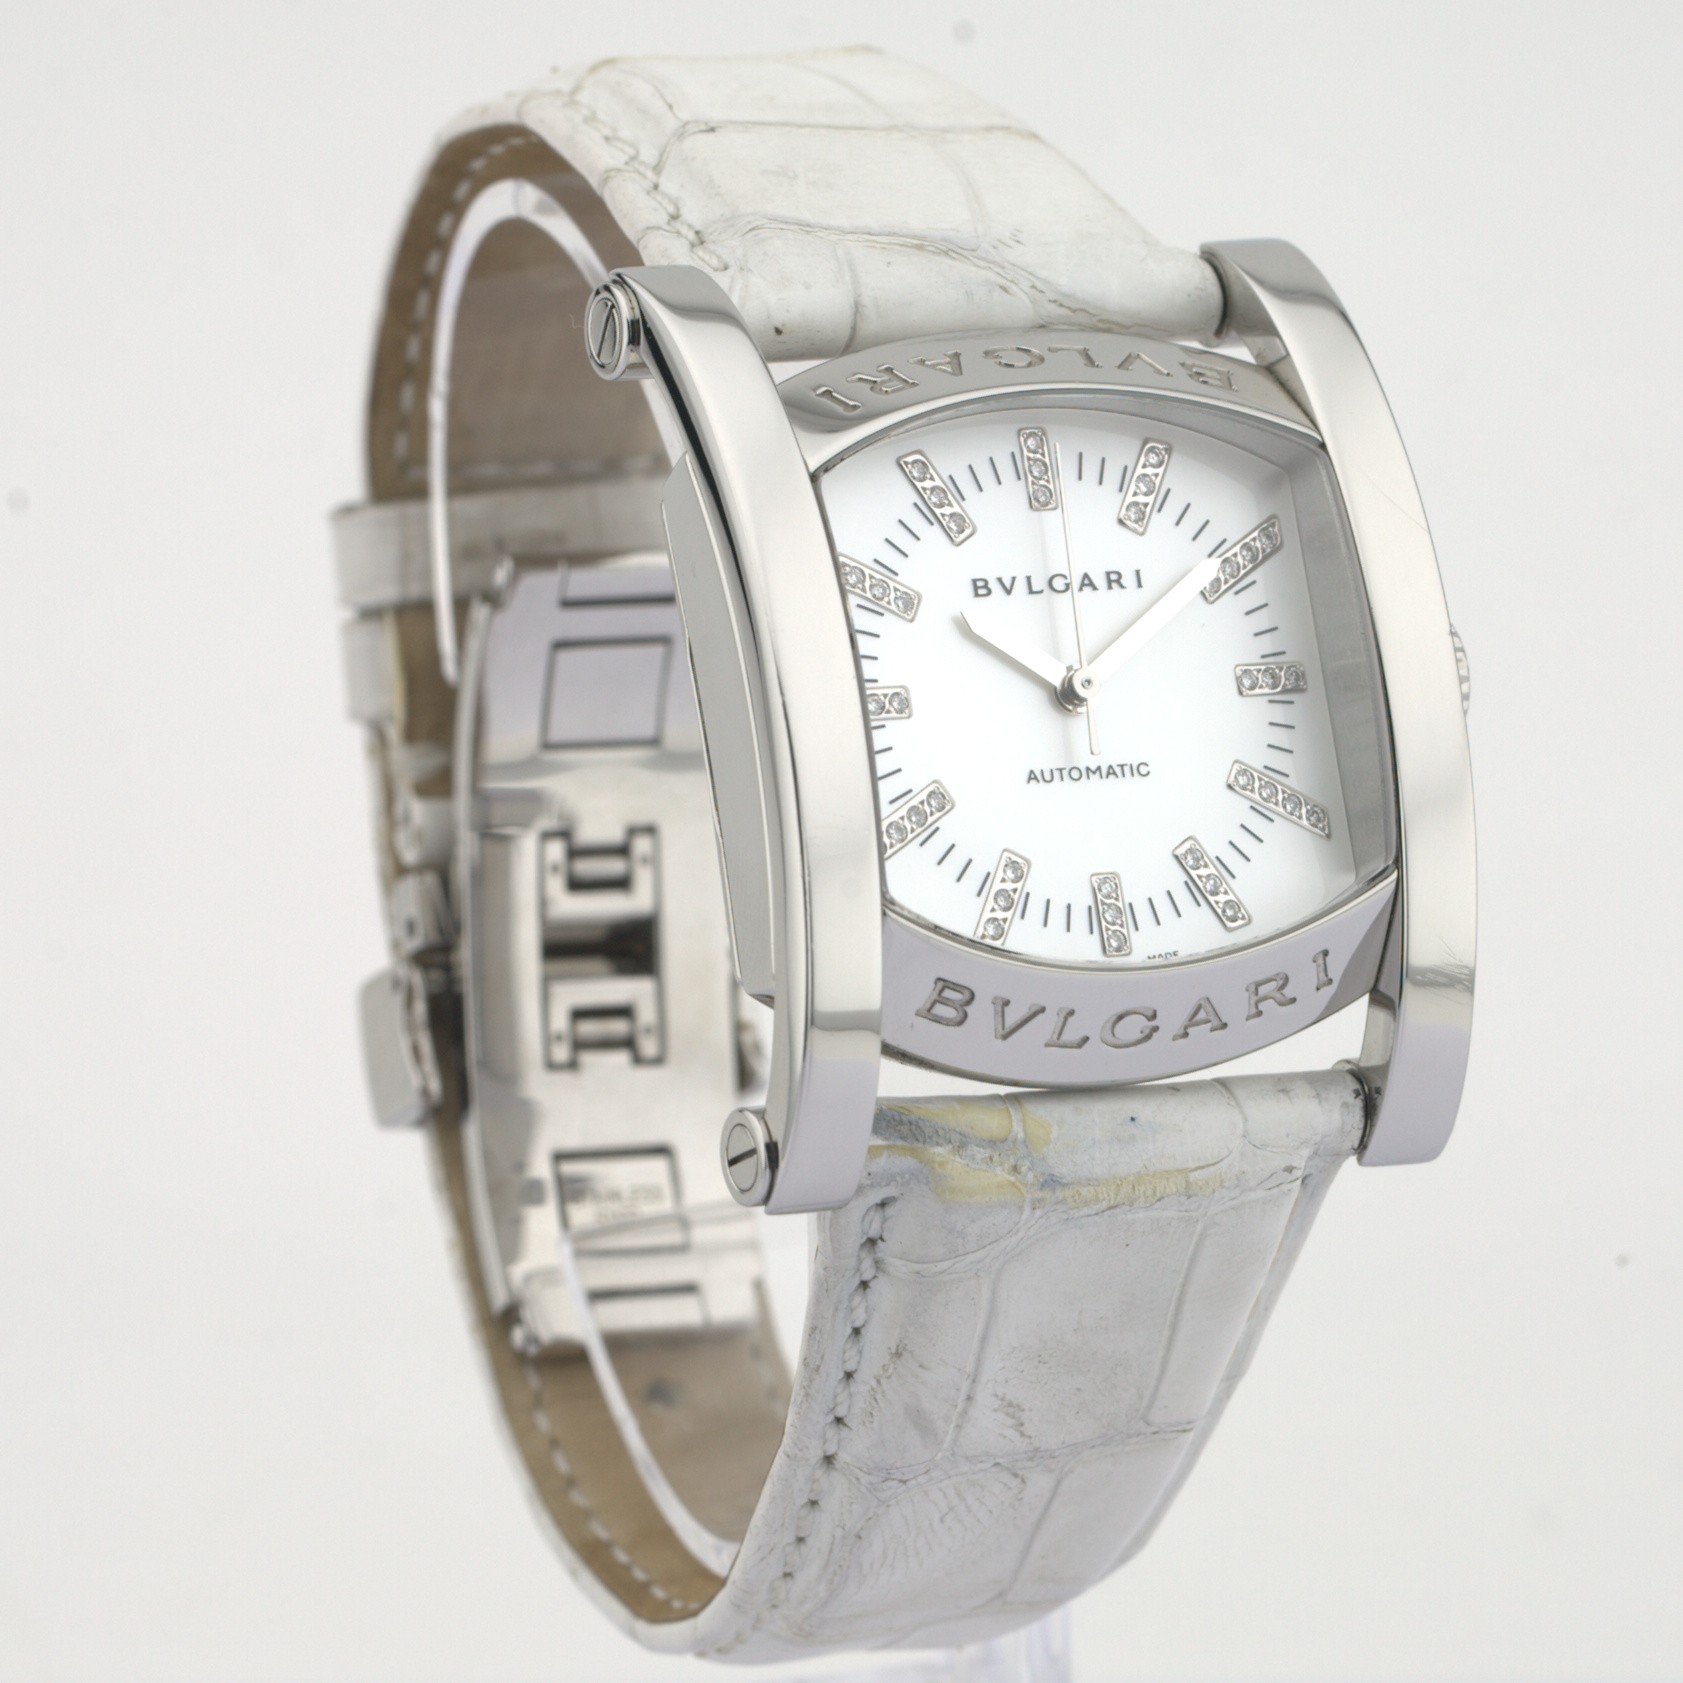 Bvlgari / AA44S Diamond - Gentlemen's Steel Wrist Watch - Image 3 of 9